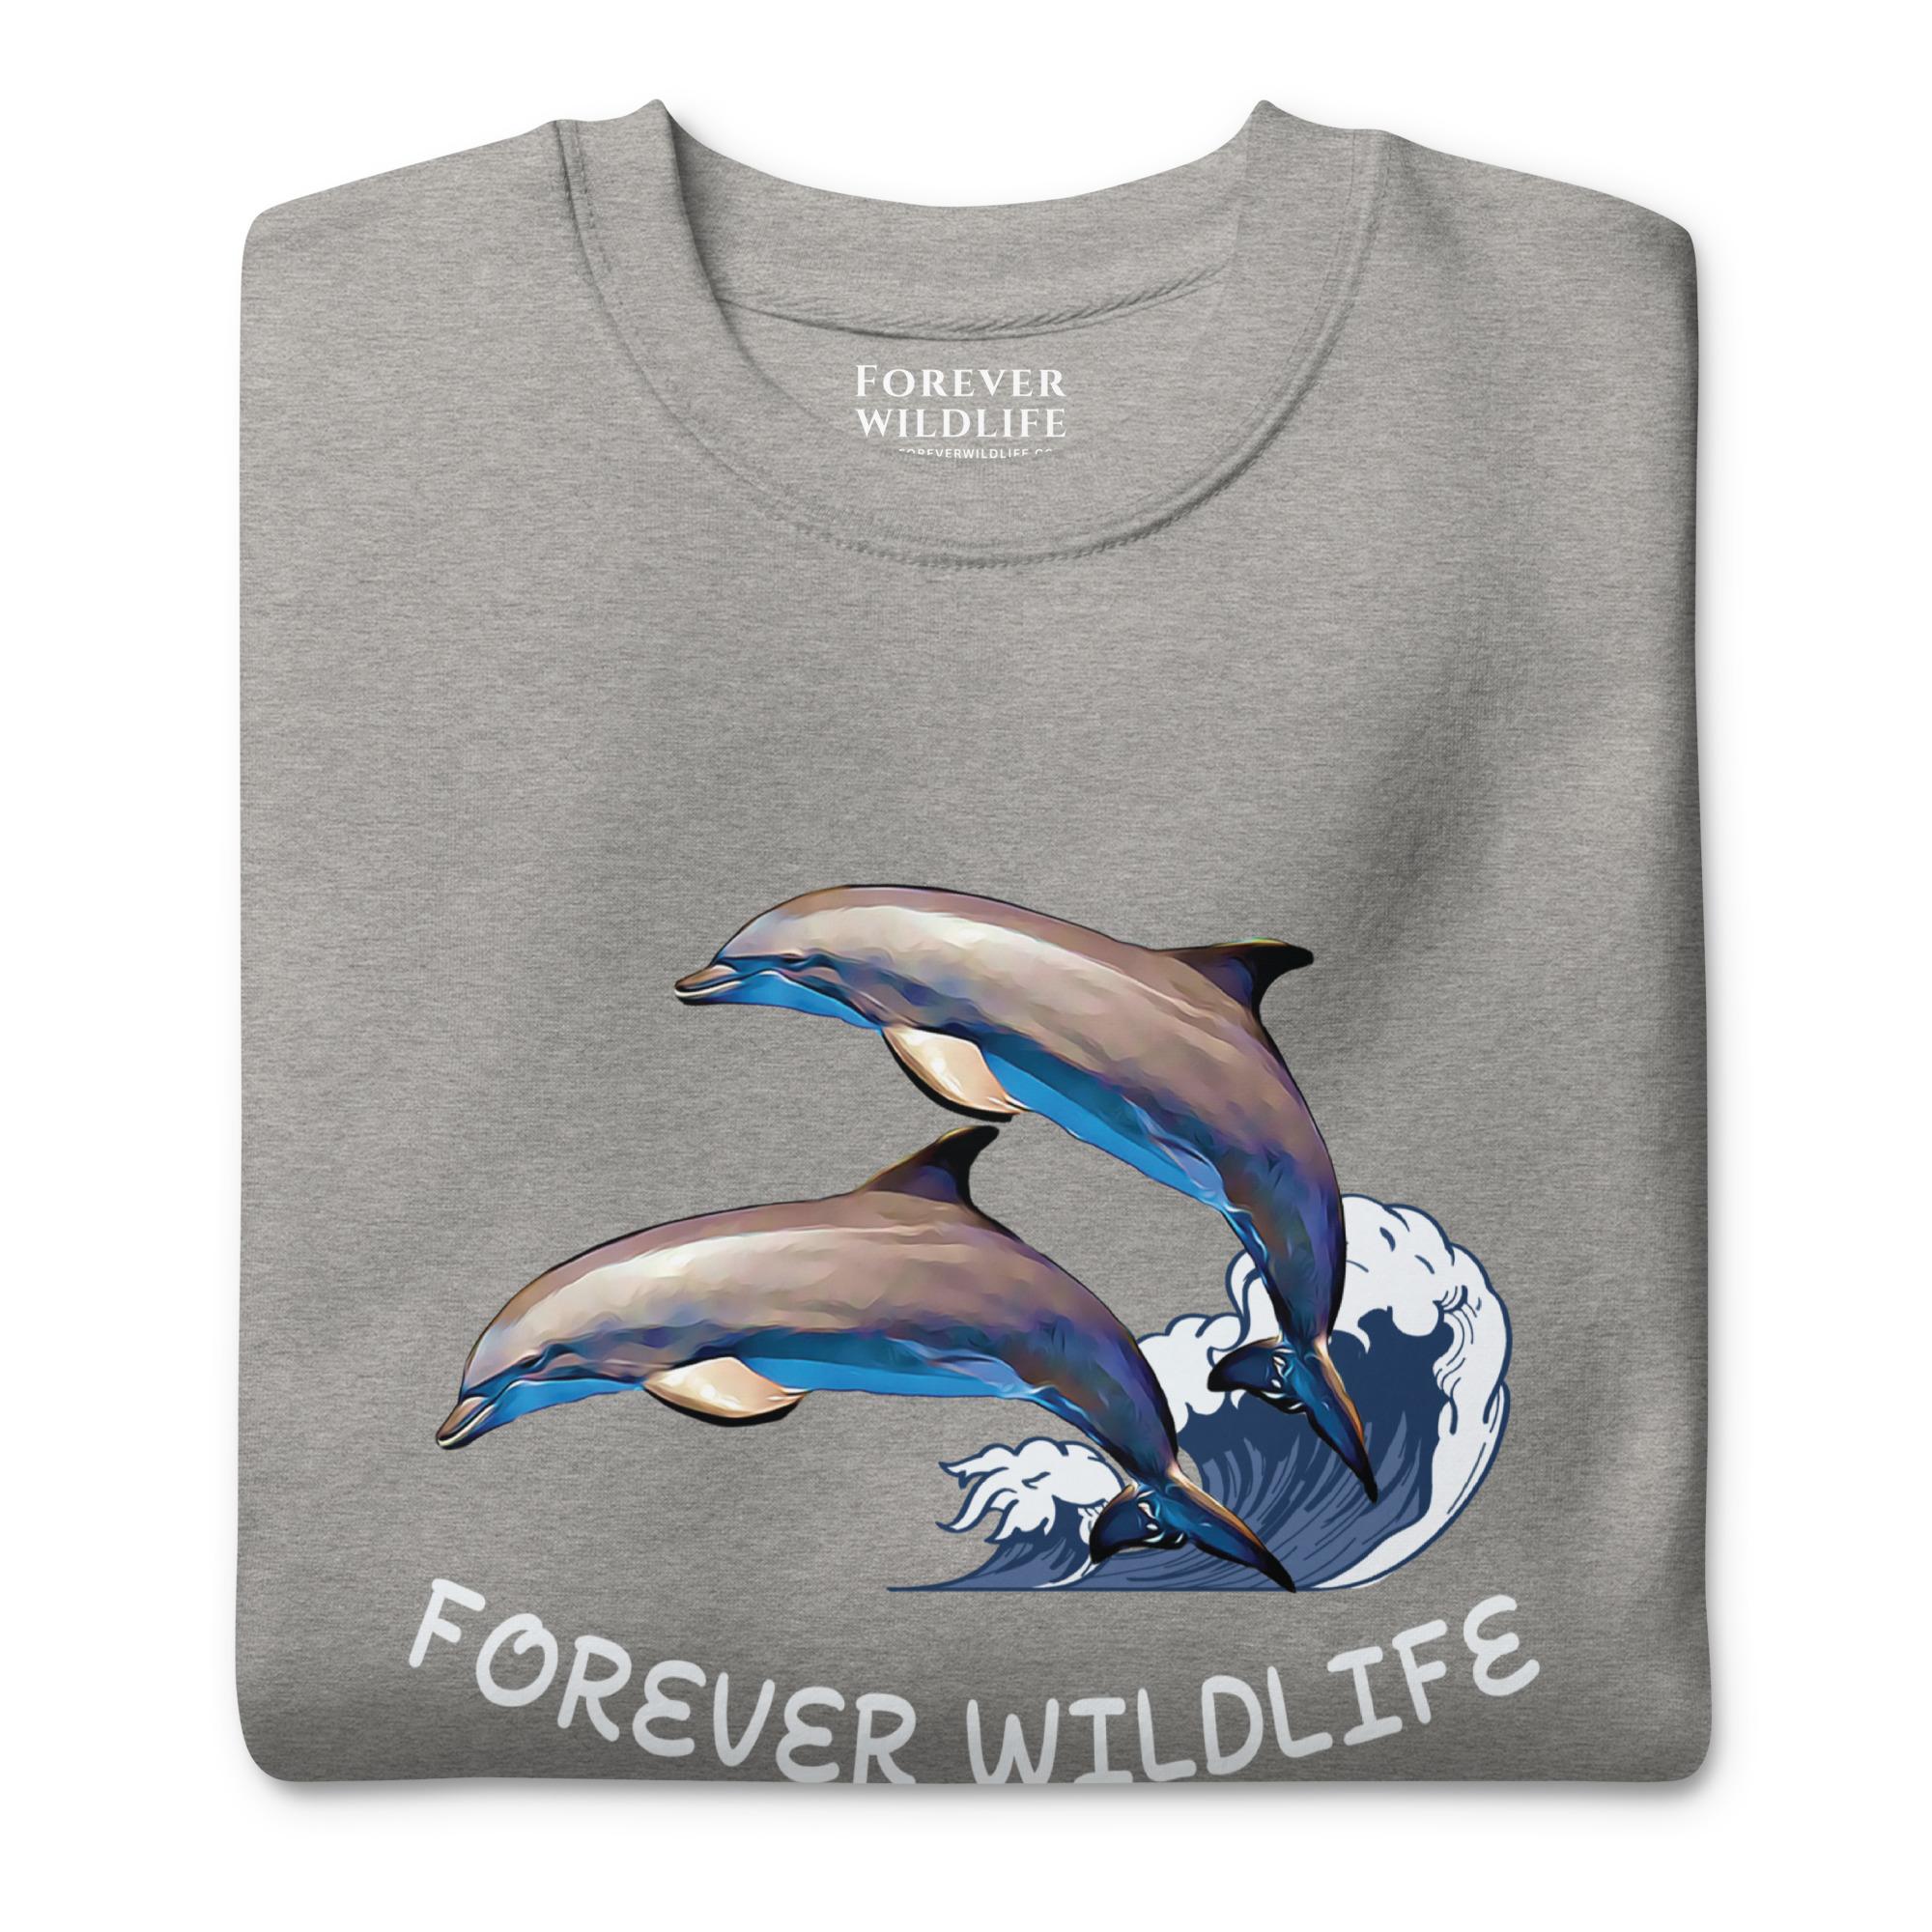 Dolphin Sweatshirt in Grey-Premium Wildlife Animal Inspiration Sweatshirt Design, part of Wildlife Sweatshirts & Clothing from Forever Wildlife.